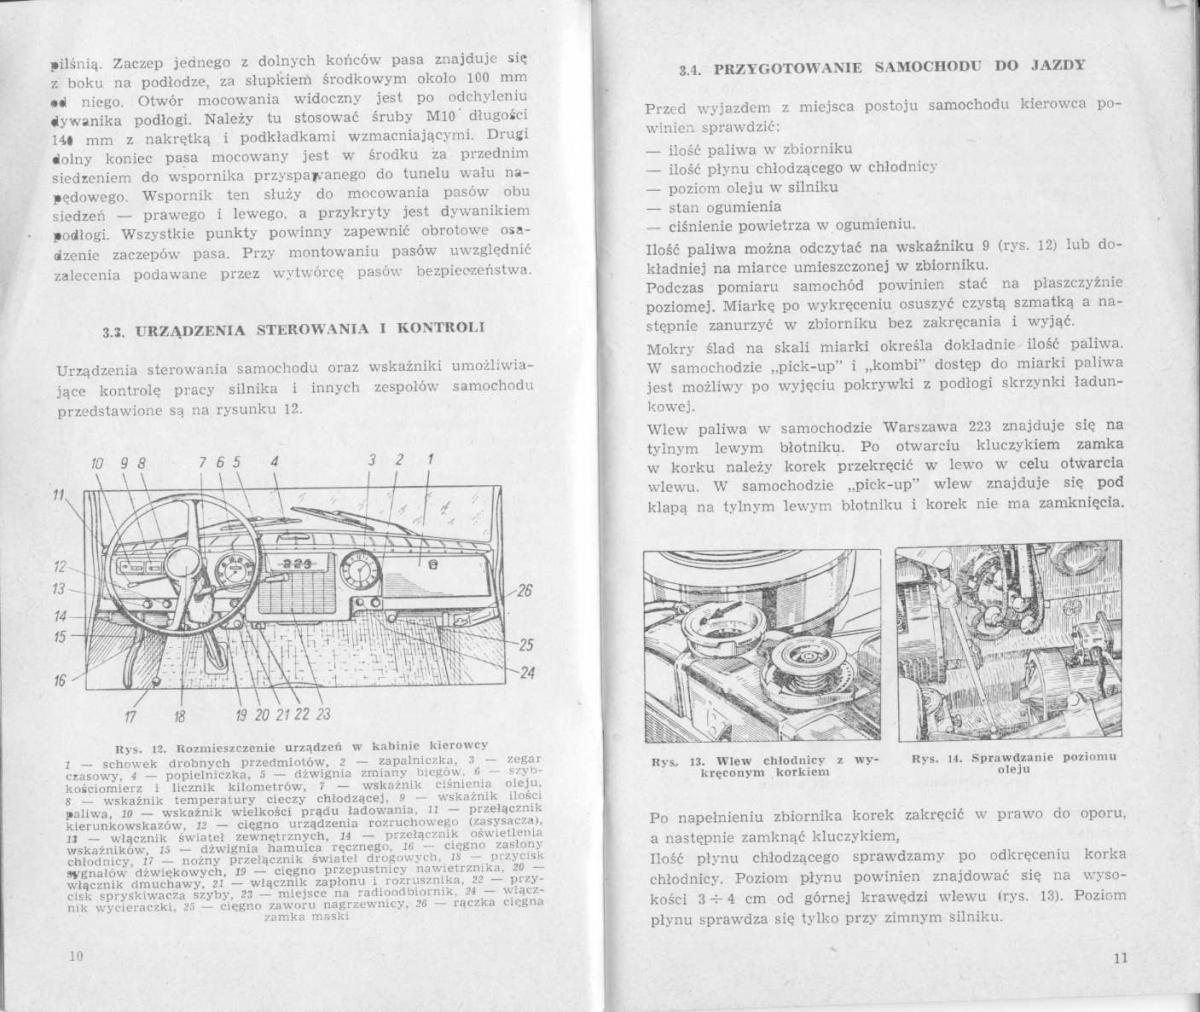 manual  FSO Warszawa instrukcja / page 6